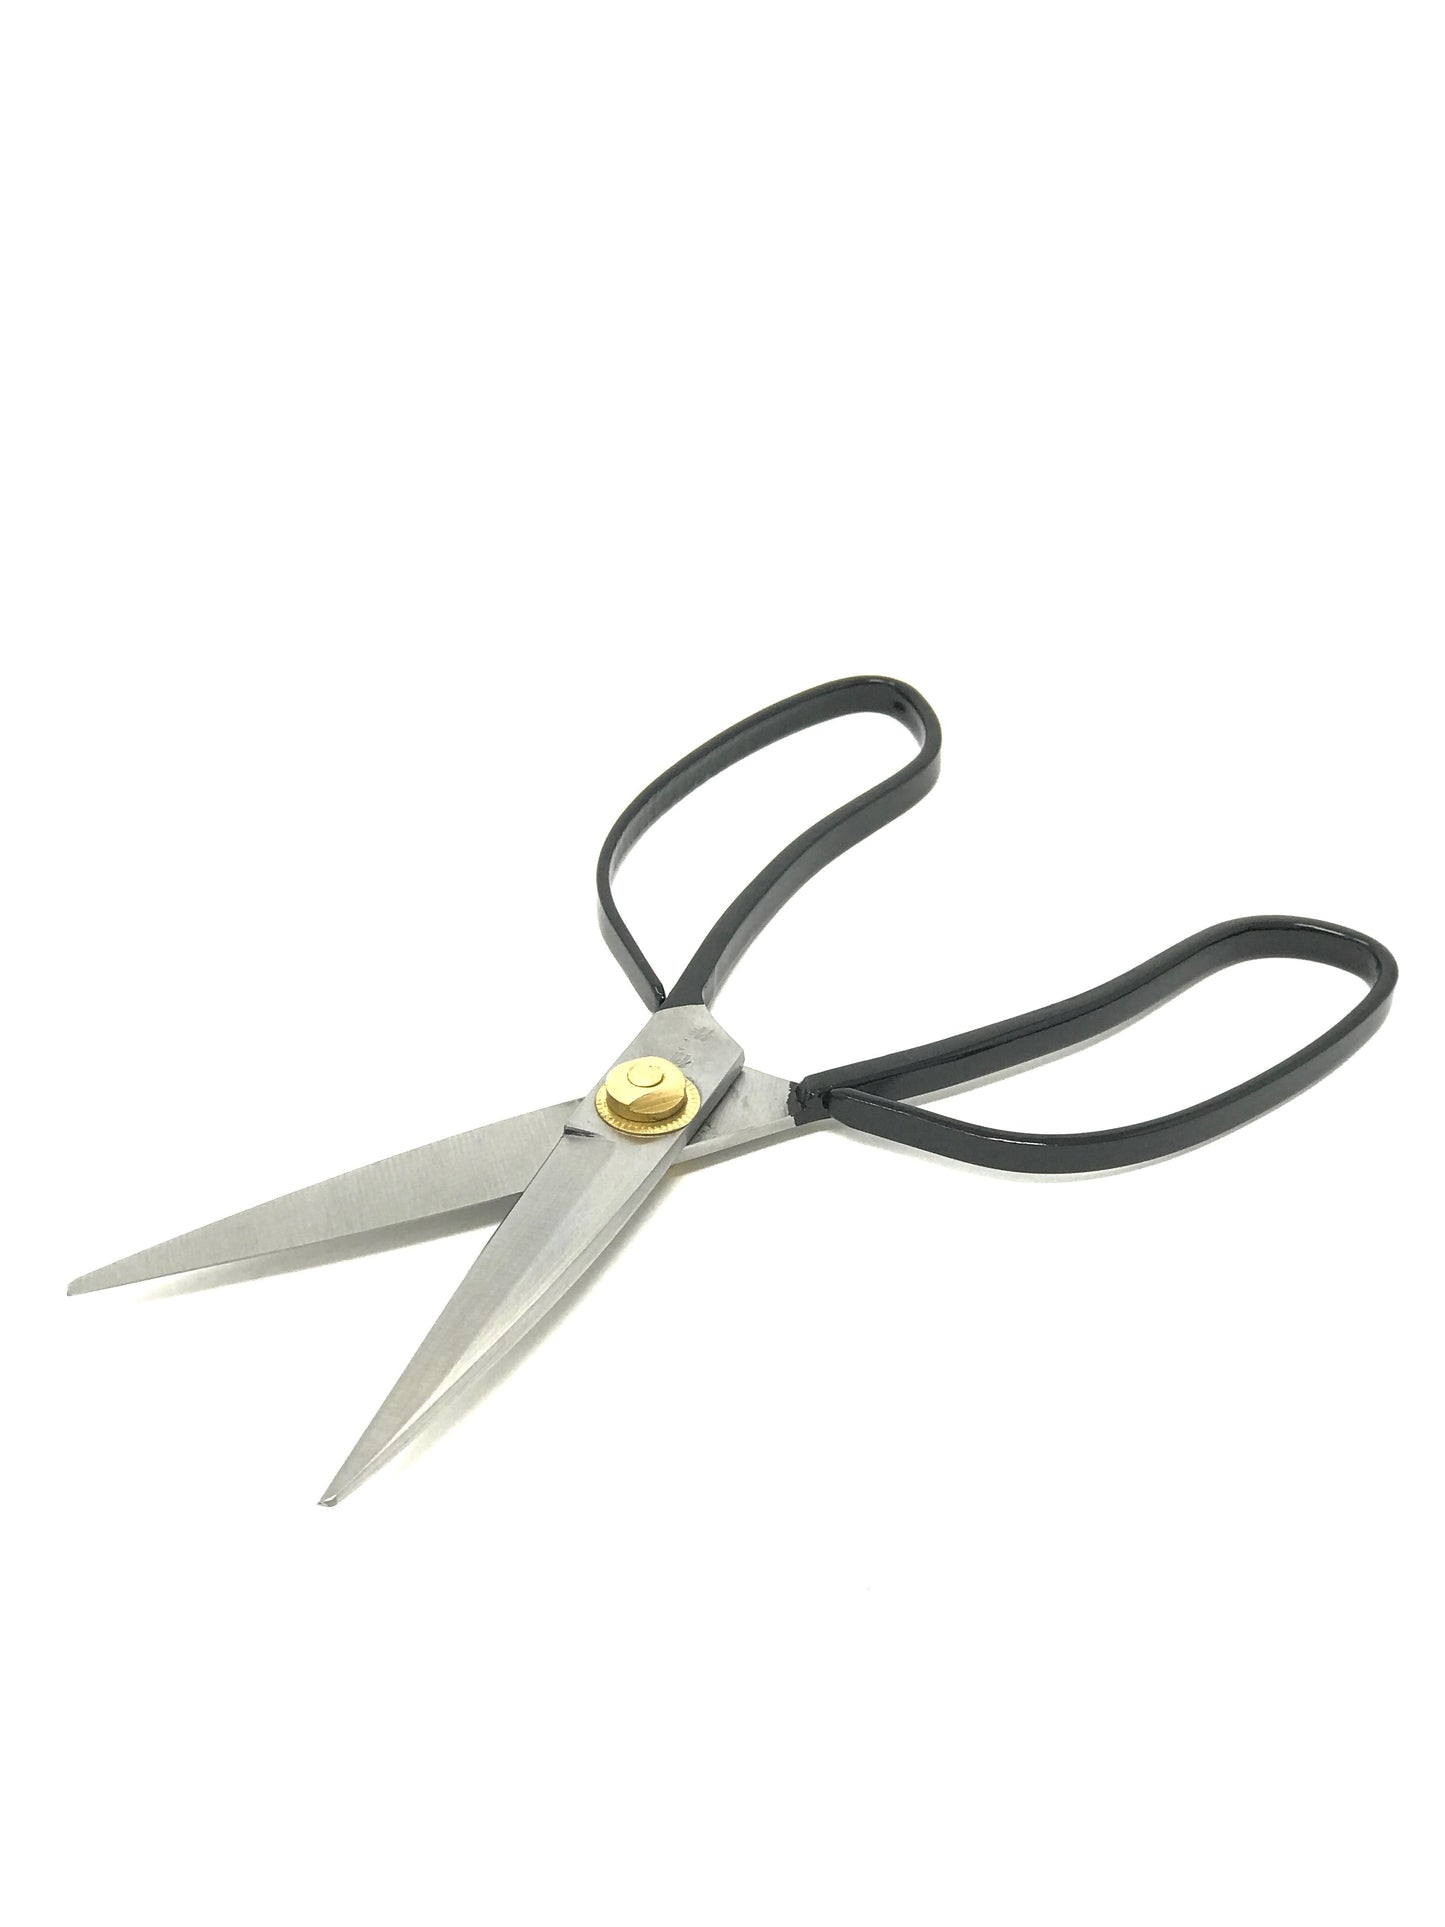 Takeji Steel Household Scissors B-6